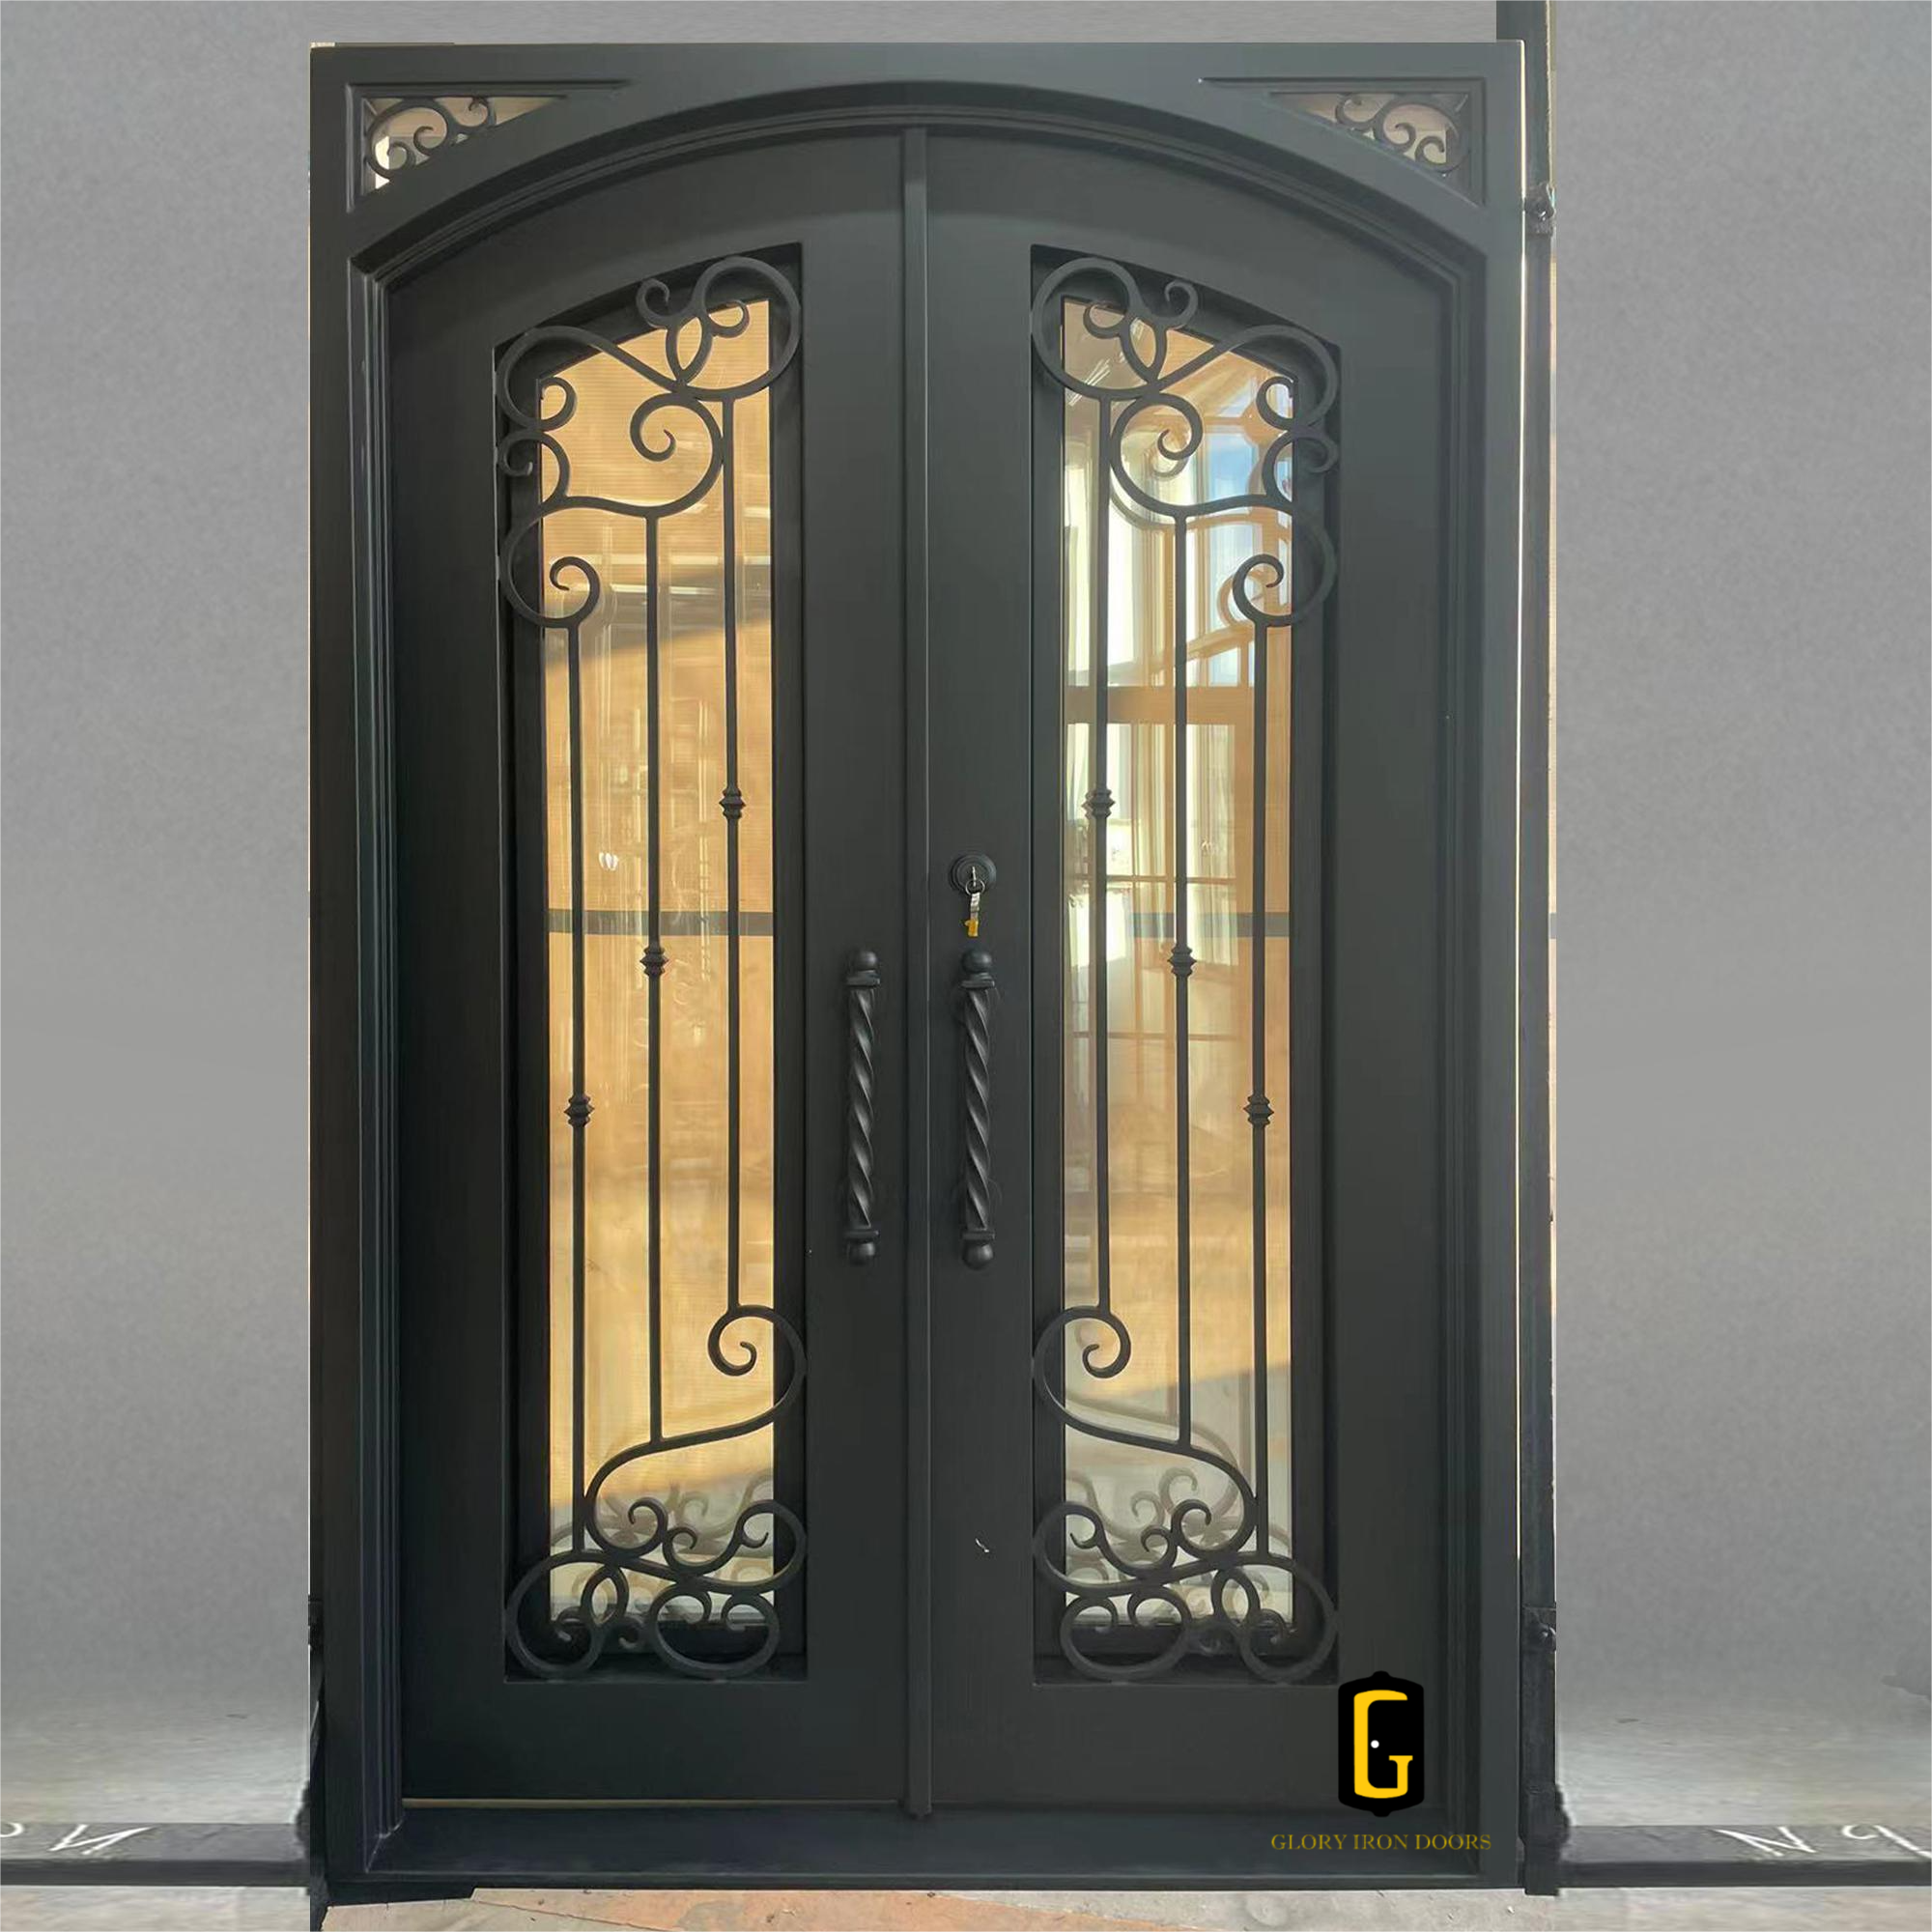 gid thermal break iron front double door with double pane glazed glass